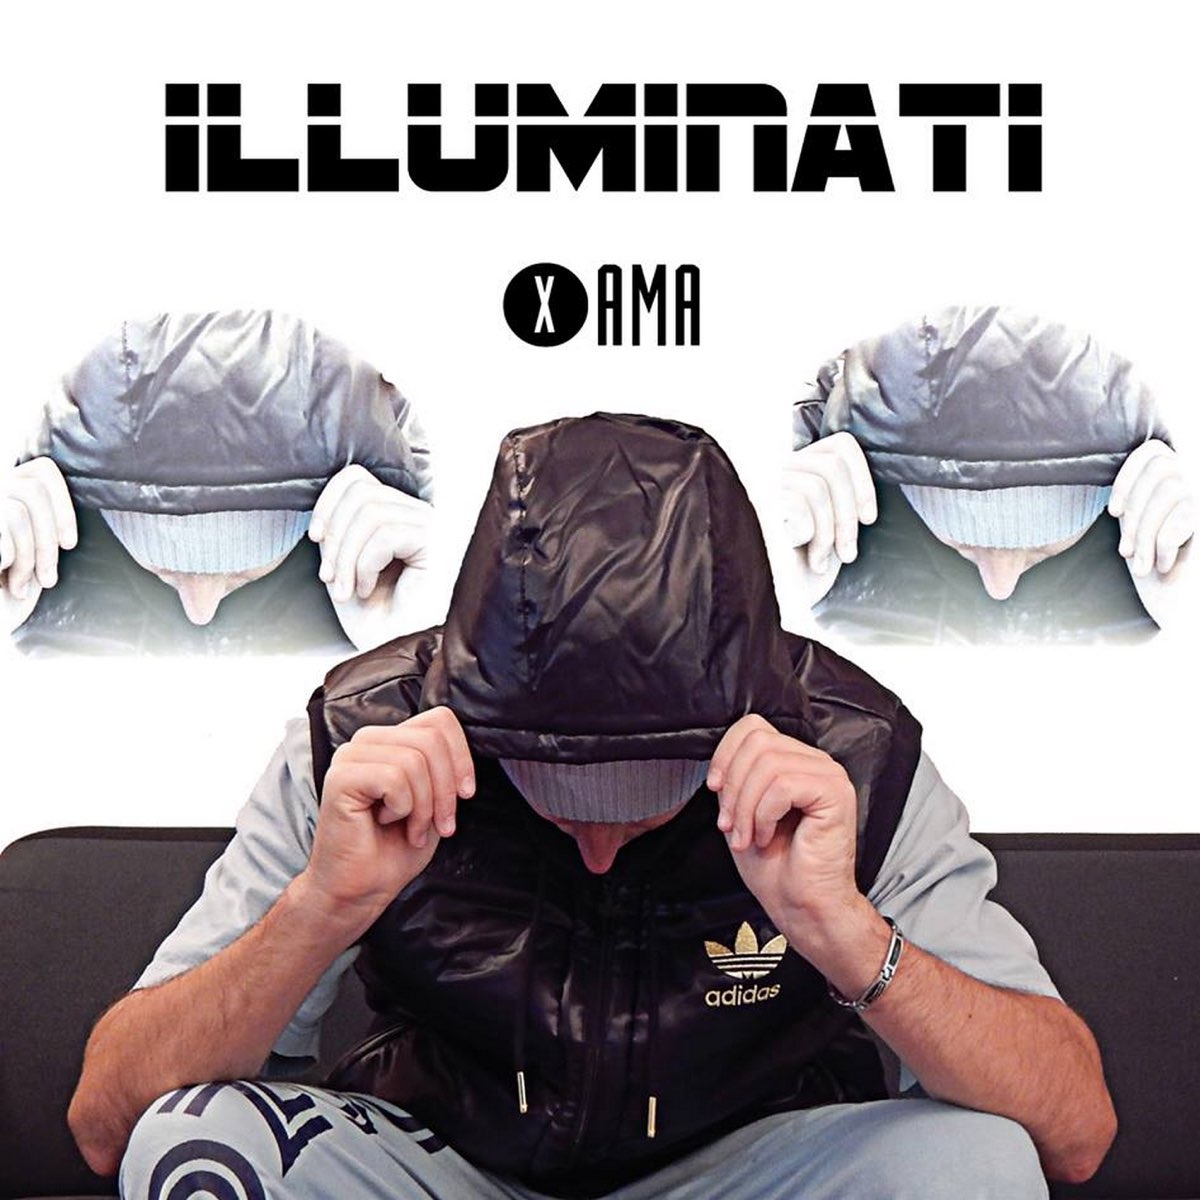 Illuminati - Album by Xama Rcb - Apple Music